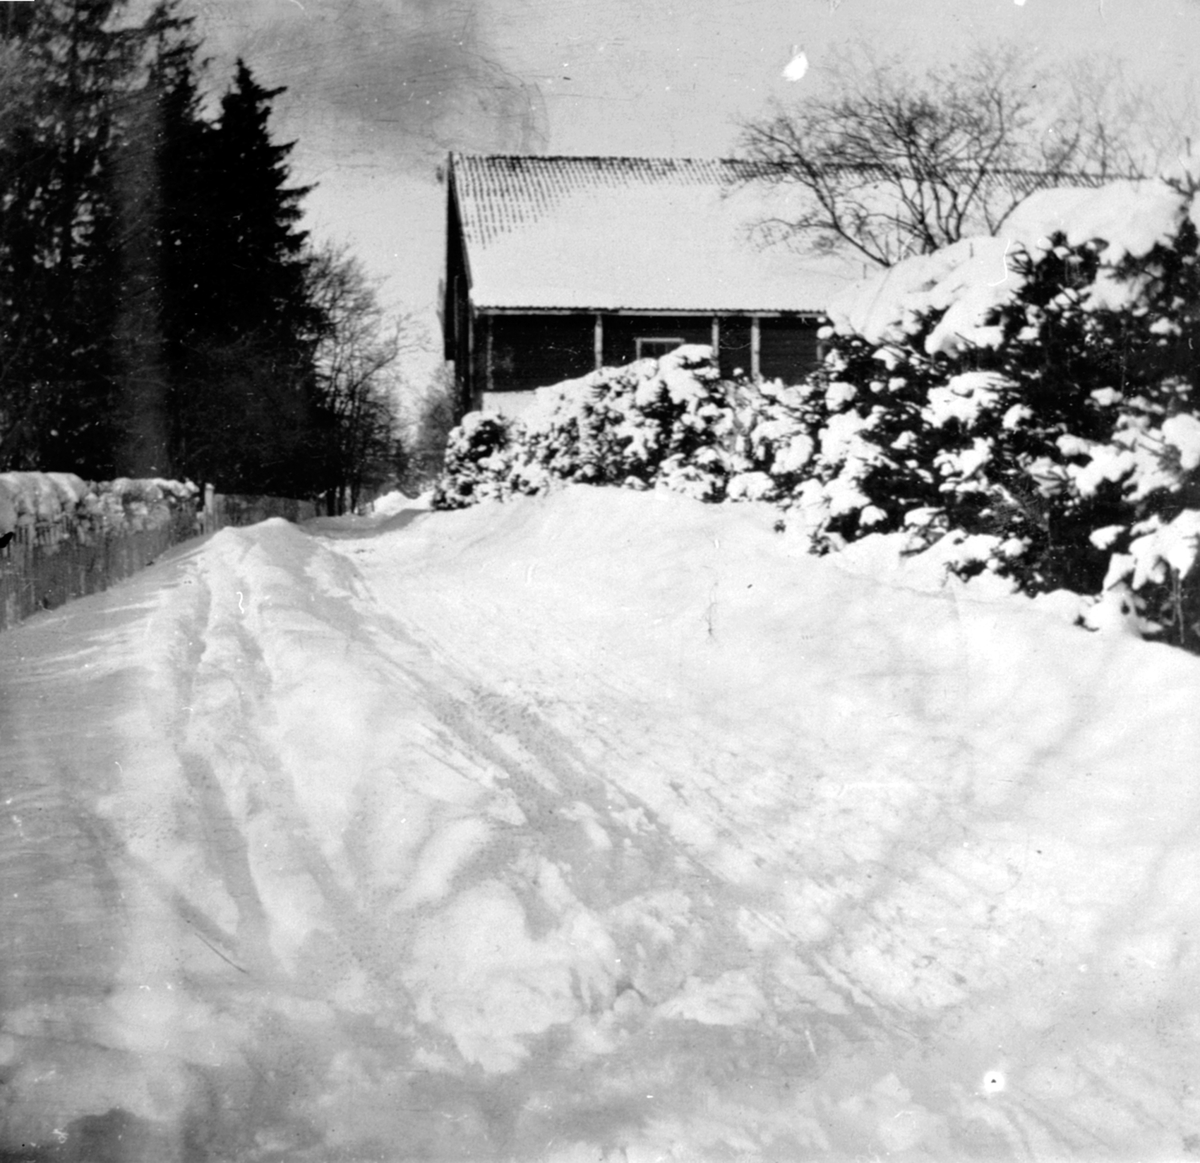 Låven på Hovelsrud, Helgøya. Vinter med mye snø. Skispor.